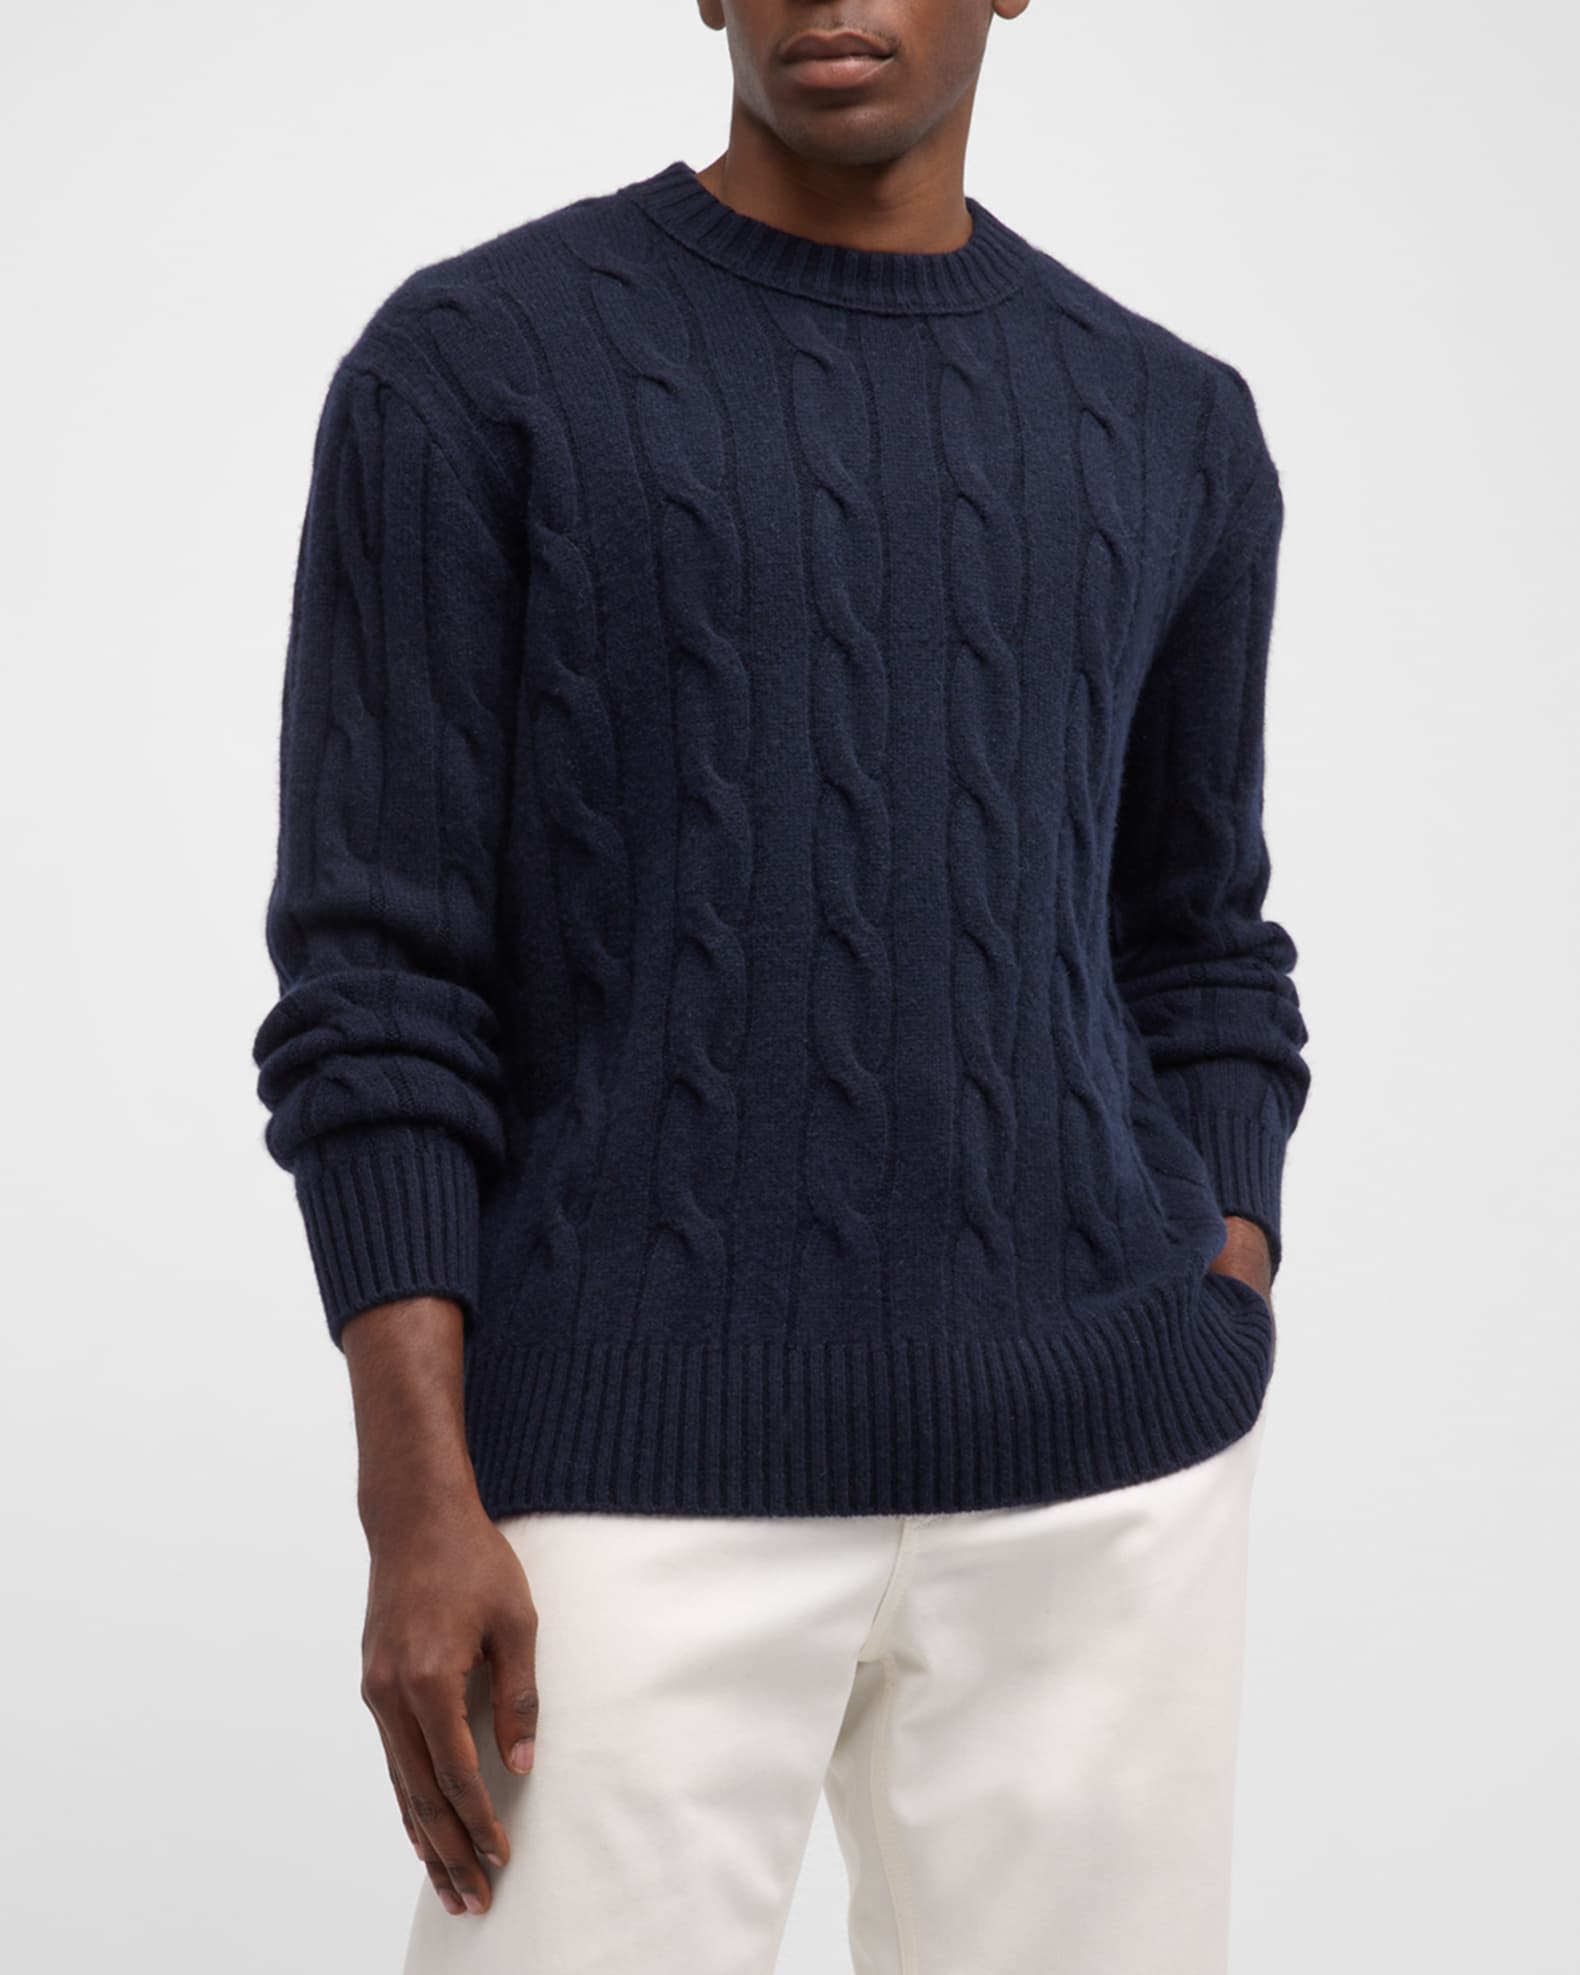 Louis Vuitton Tricolor Knit High Neck Pullover